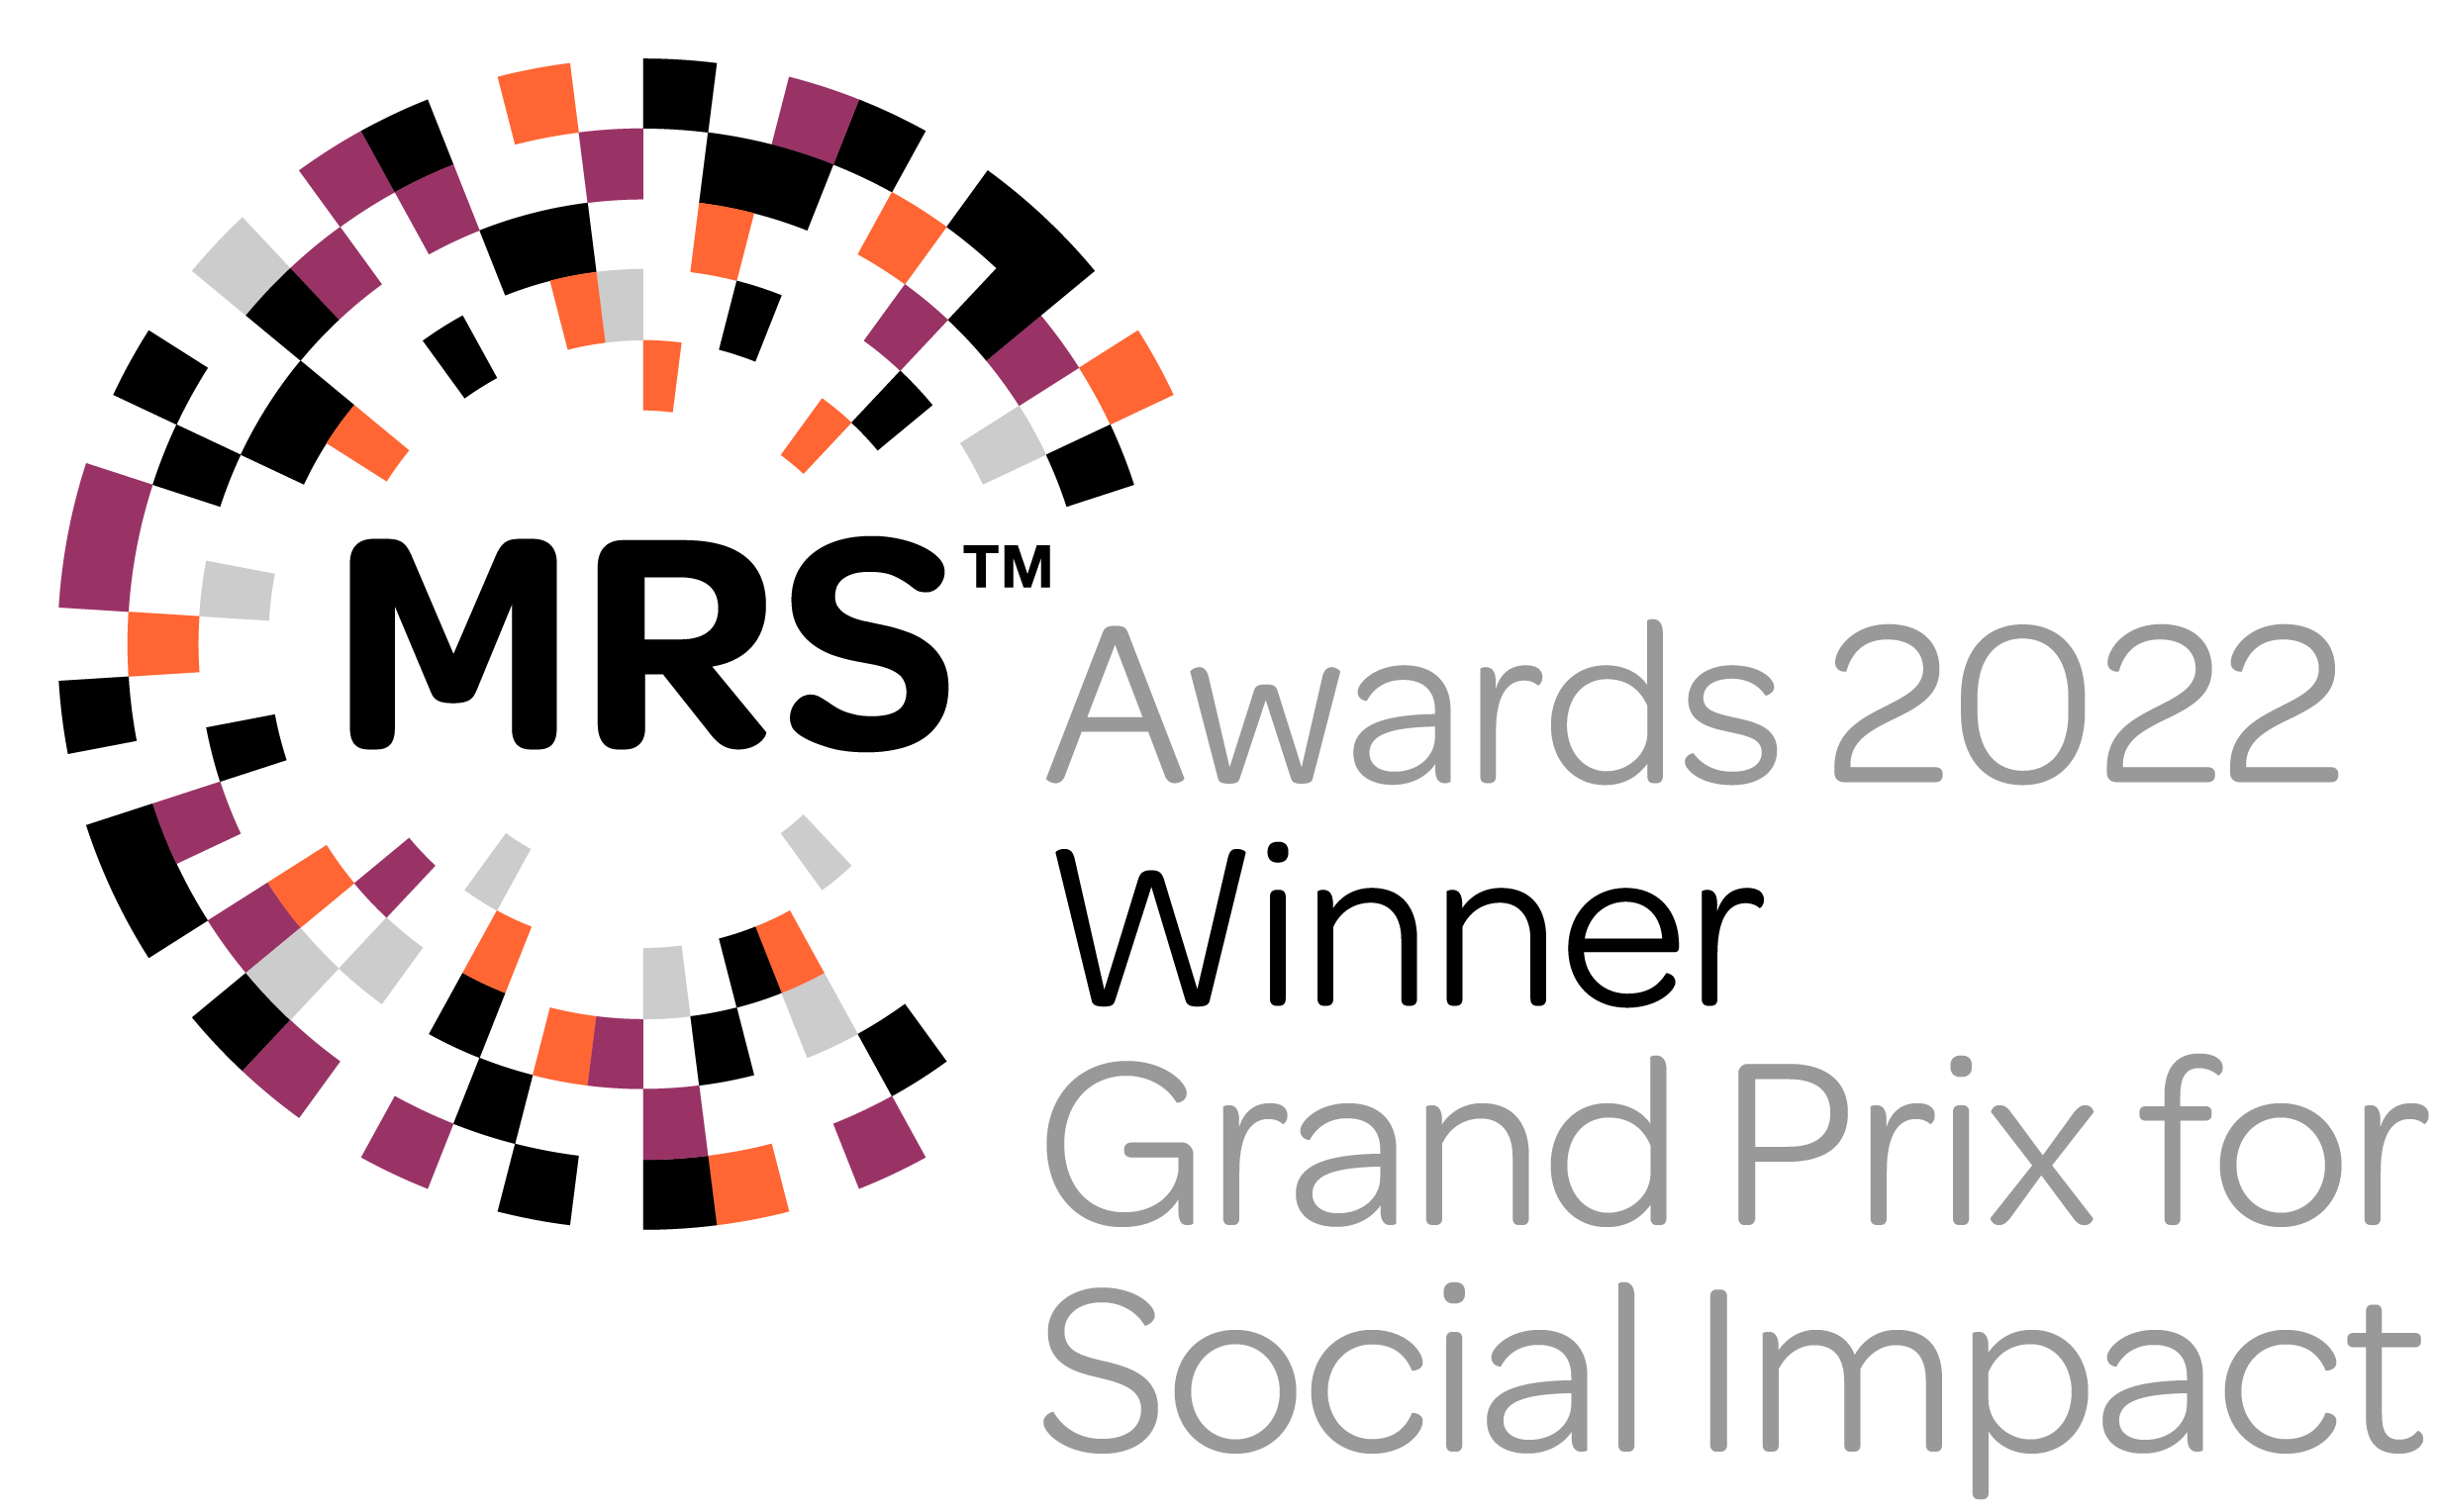 Market Research Society - Winner of the Liz Nelson Grand Prix Award for Social Impact 2022